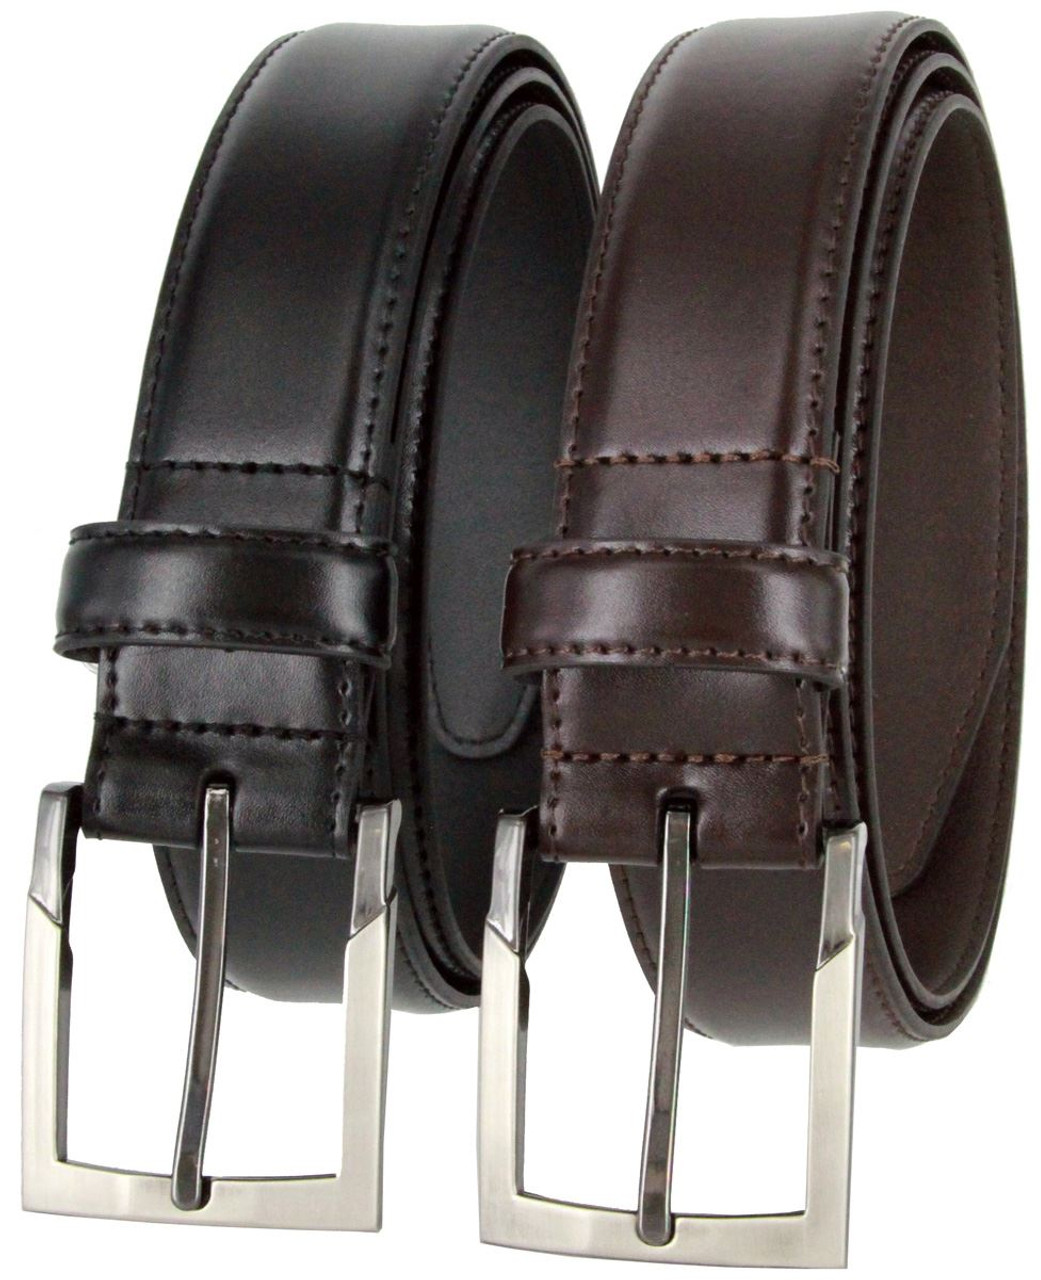 133860 Genuine Italian Calfskin Leather Dress Casual Belt 1-3/8